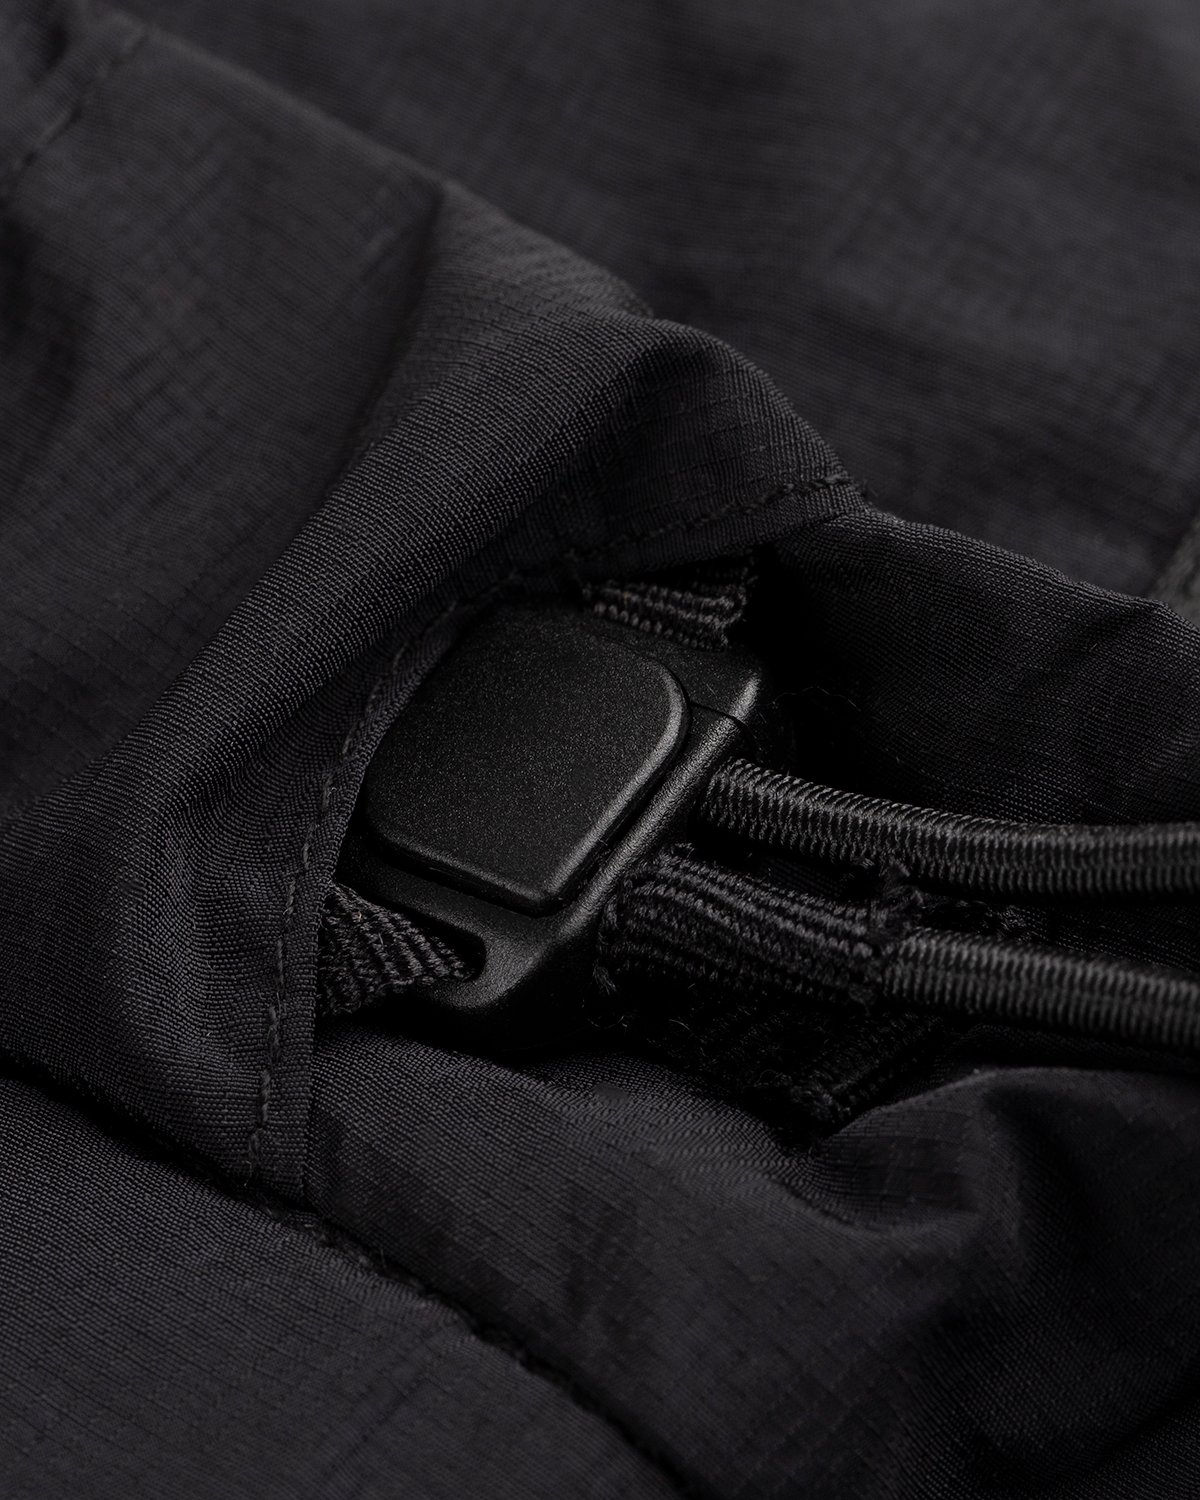 A-Cold-Wall* - Portage Pant Black - Clothing - Black - Image 7